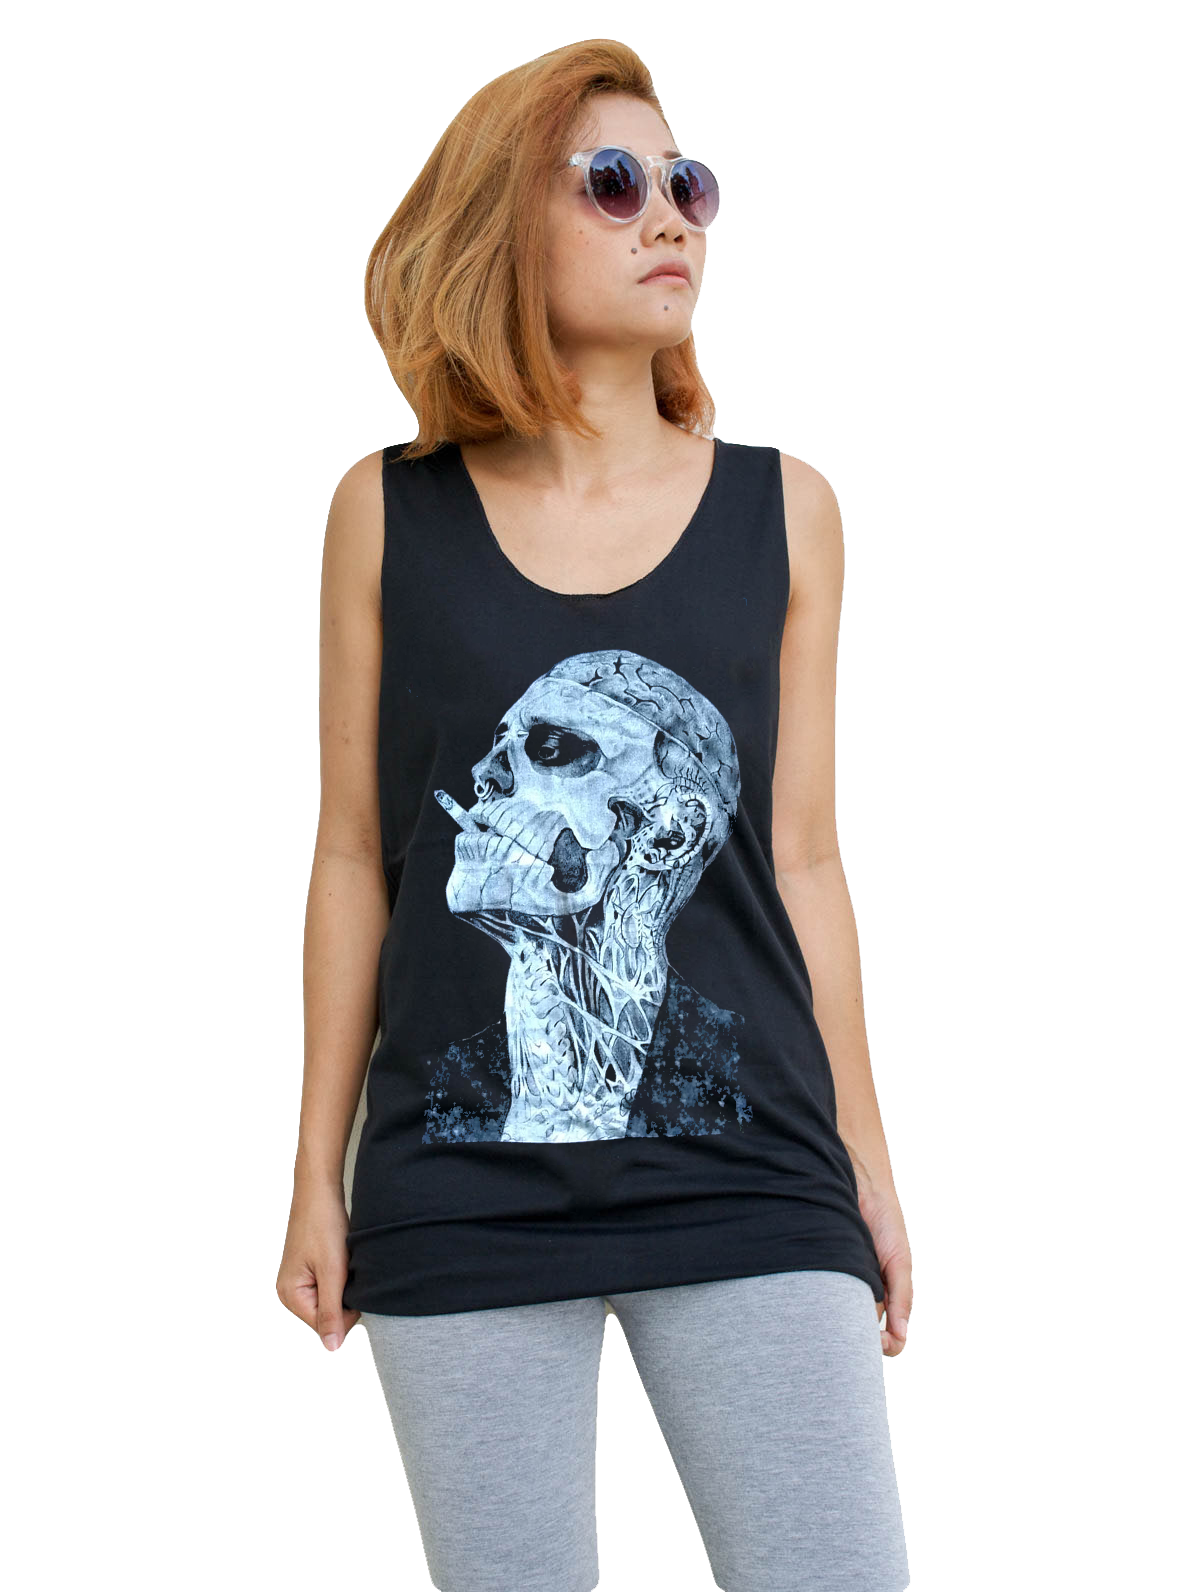 Unisex Zombie Boy Rick Genest Tank-Top Singlet vest Sleeveless T-shirt